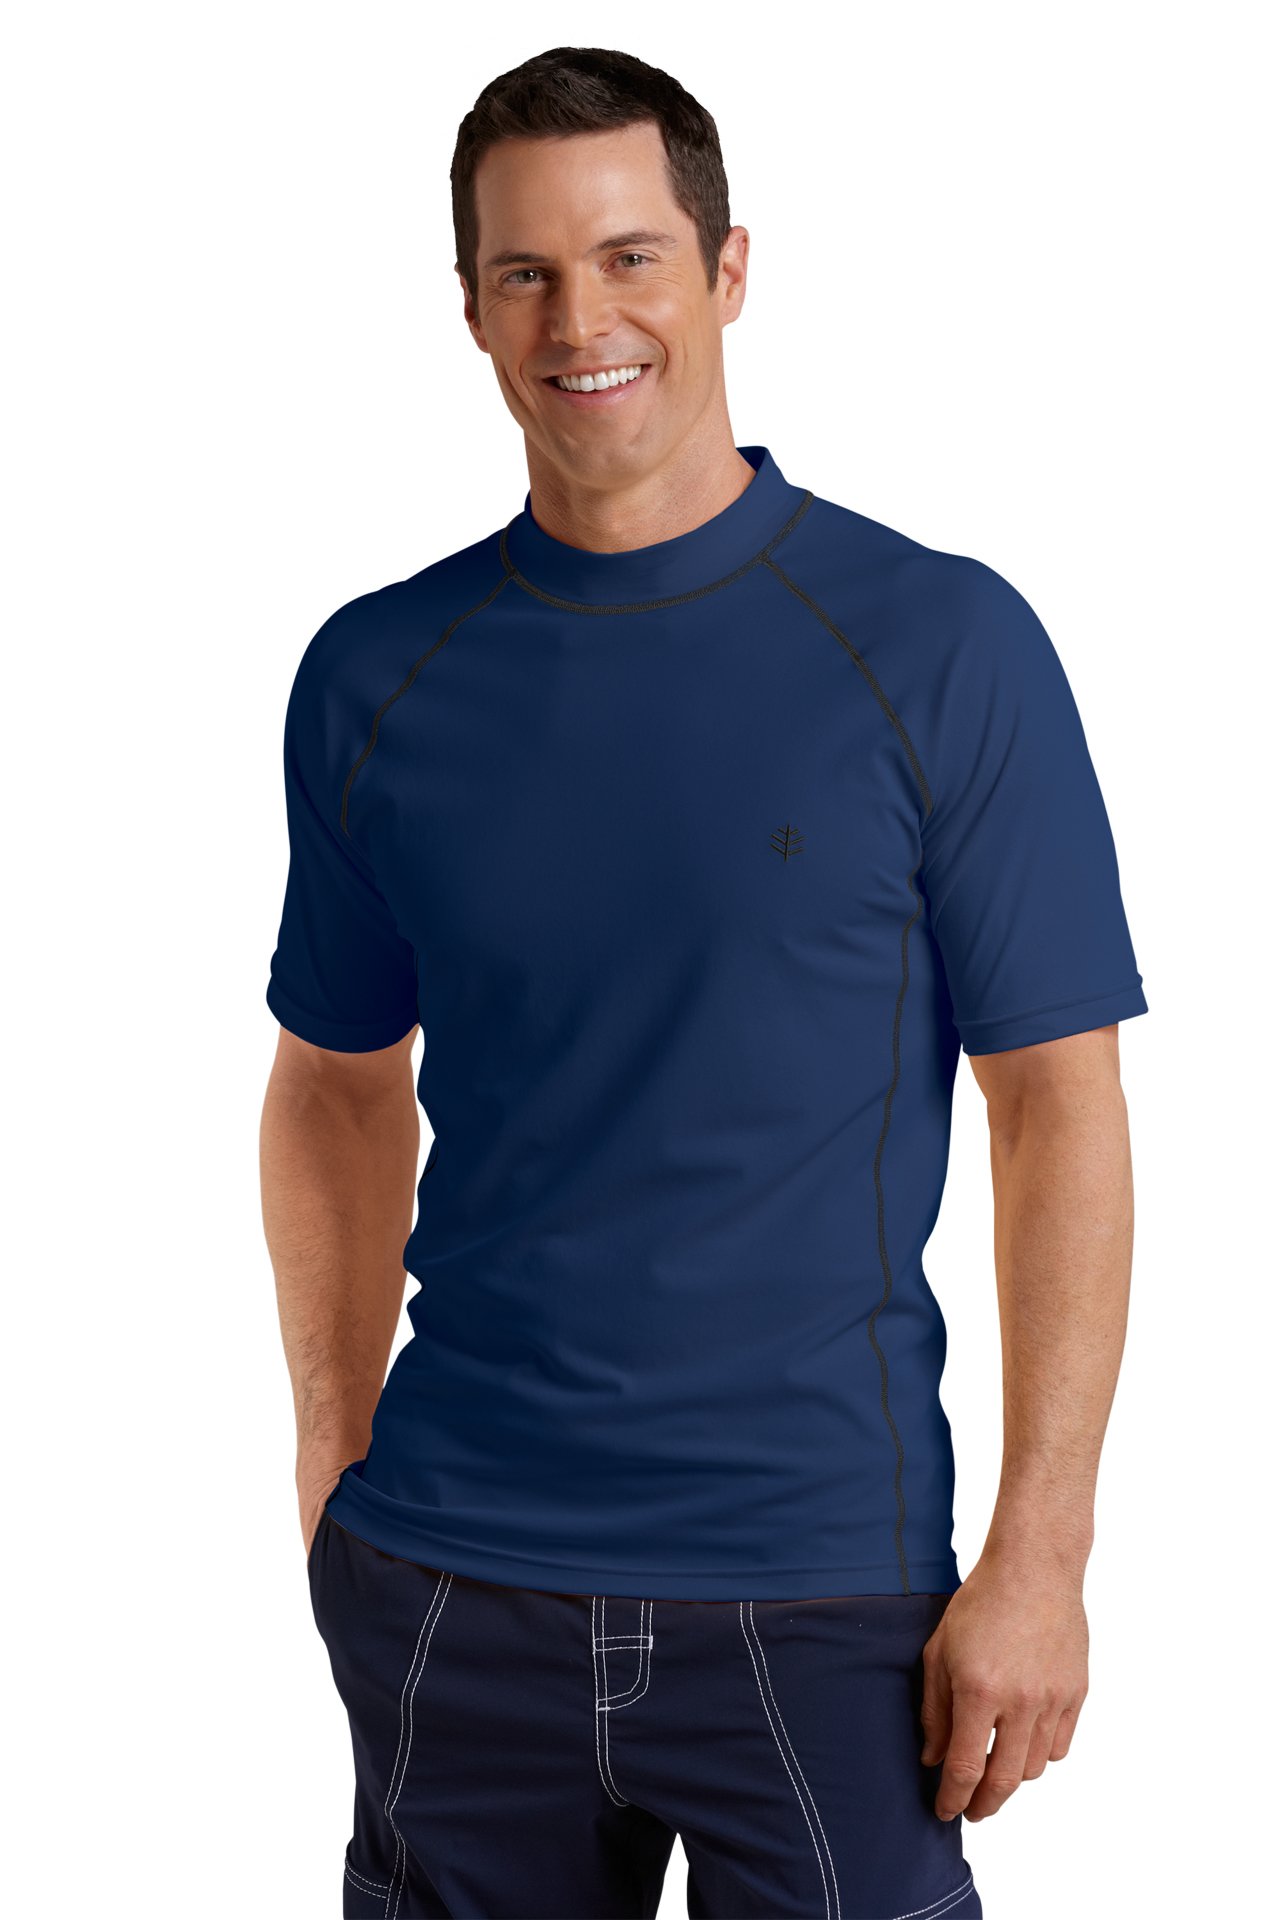 Coolibar - UV Schutz T-Shirt Herren - Navy